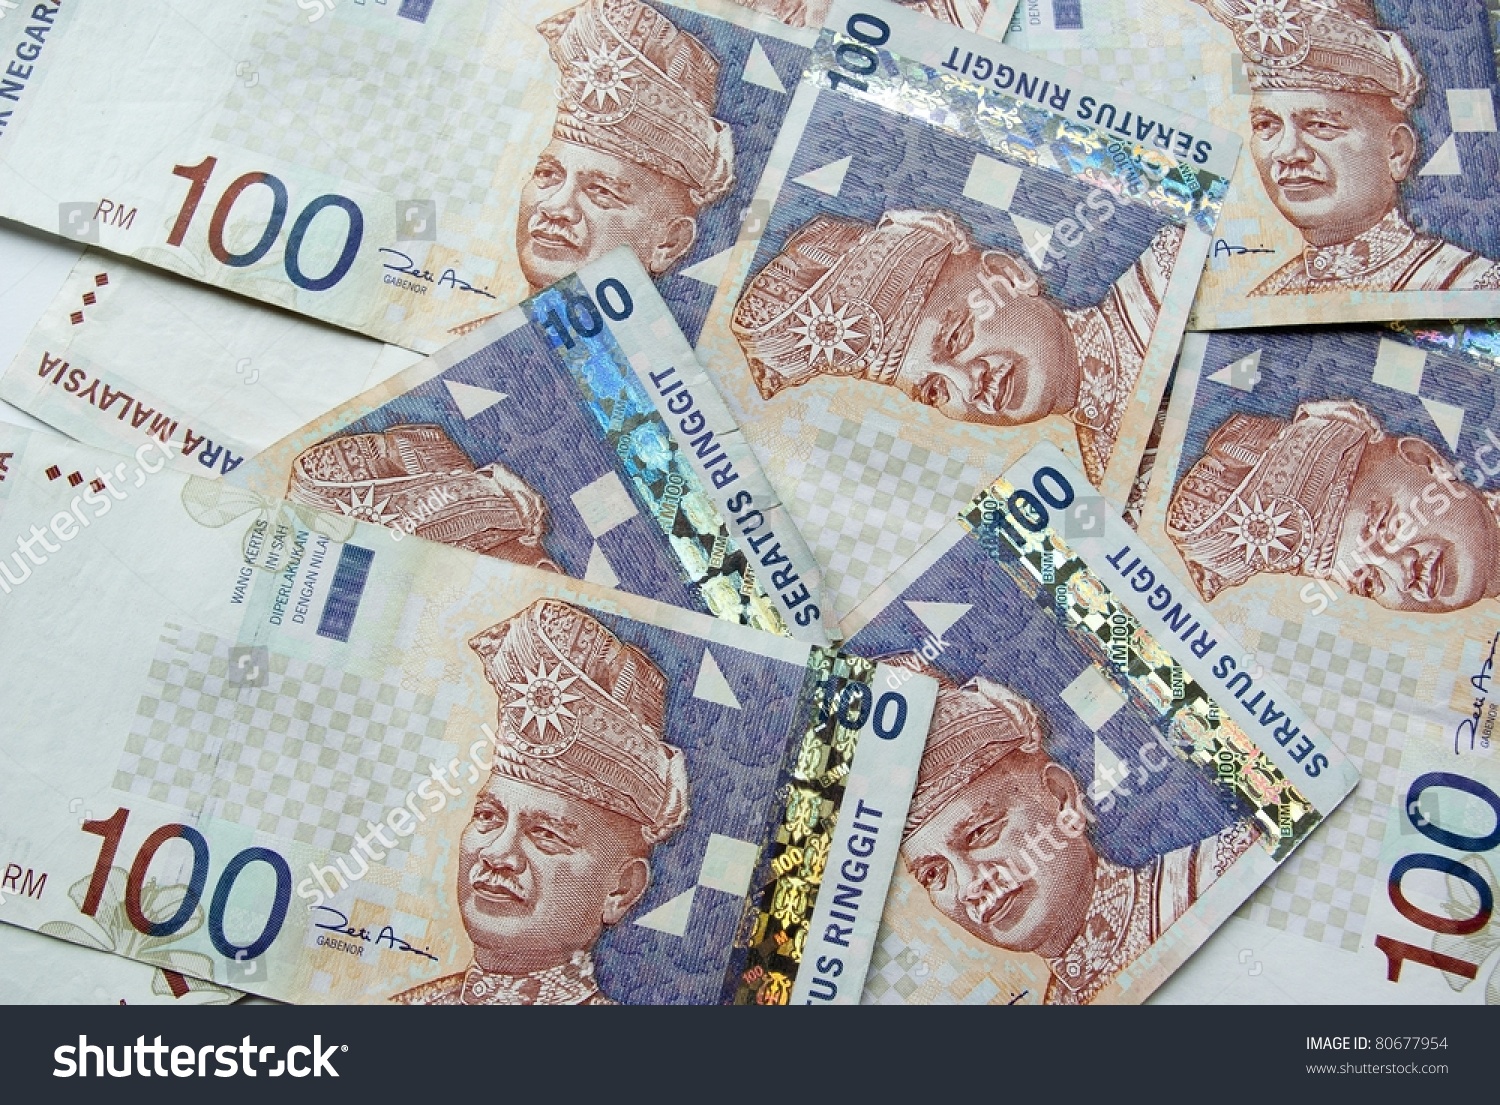 bincang forex malaysia currency